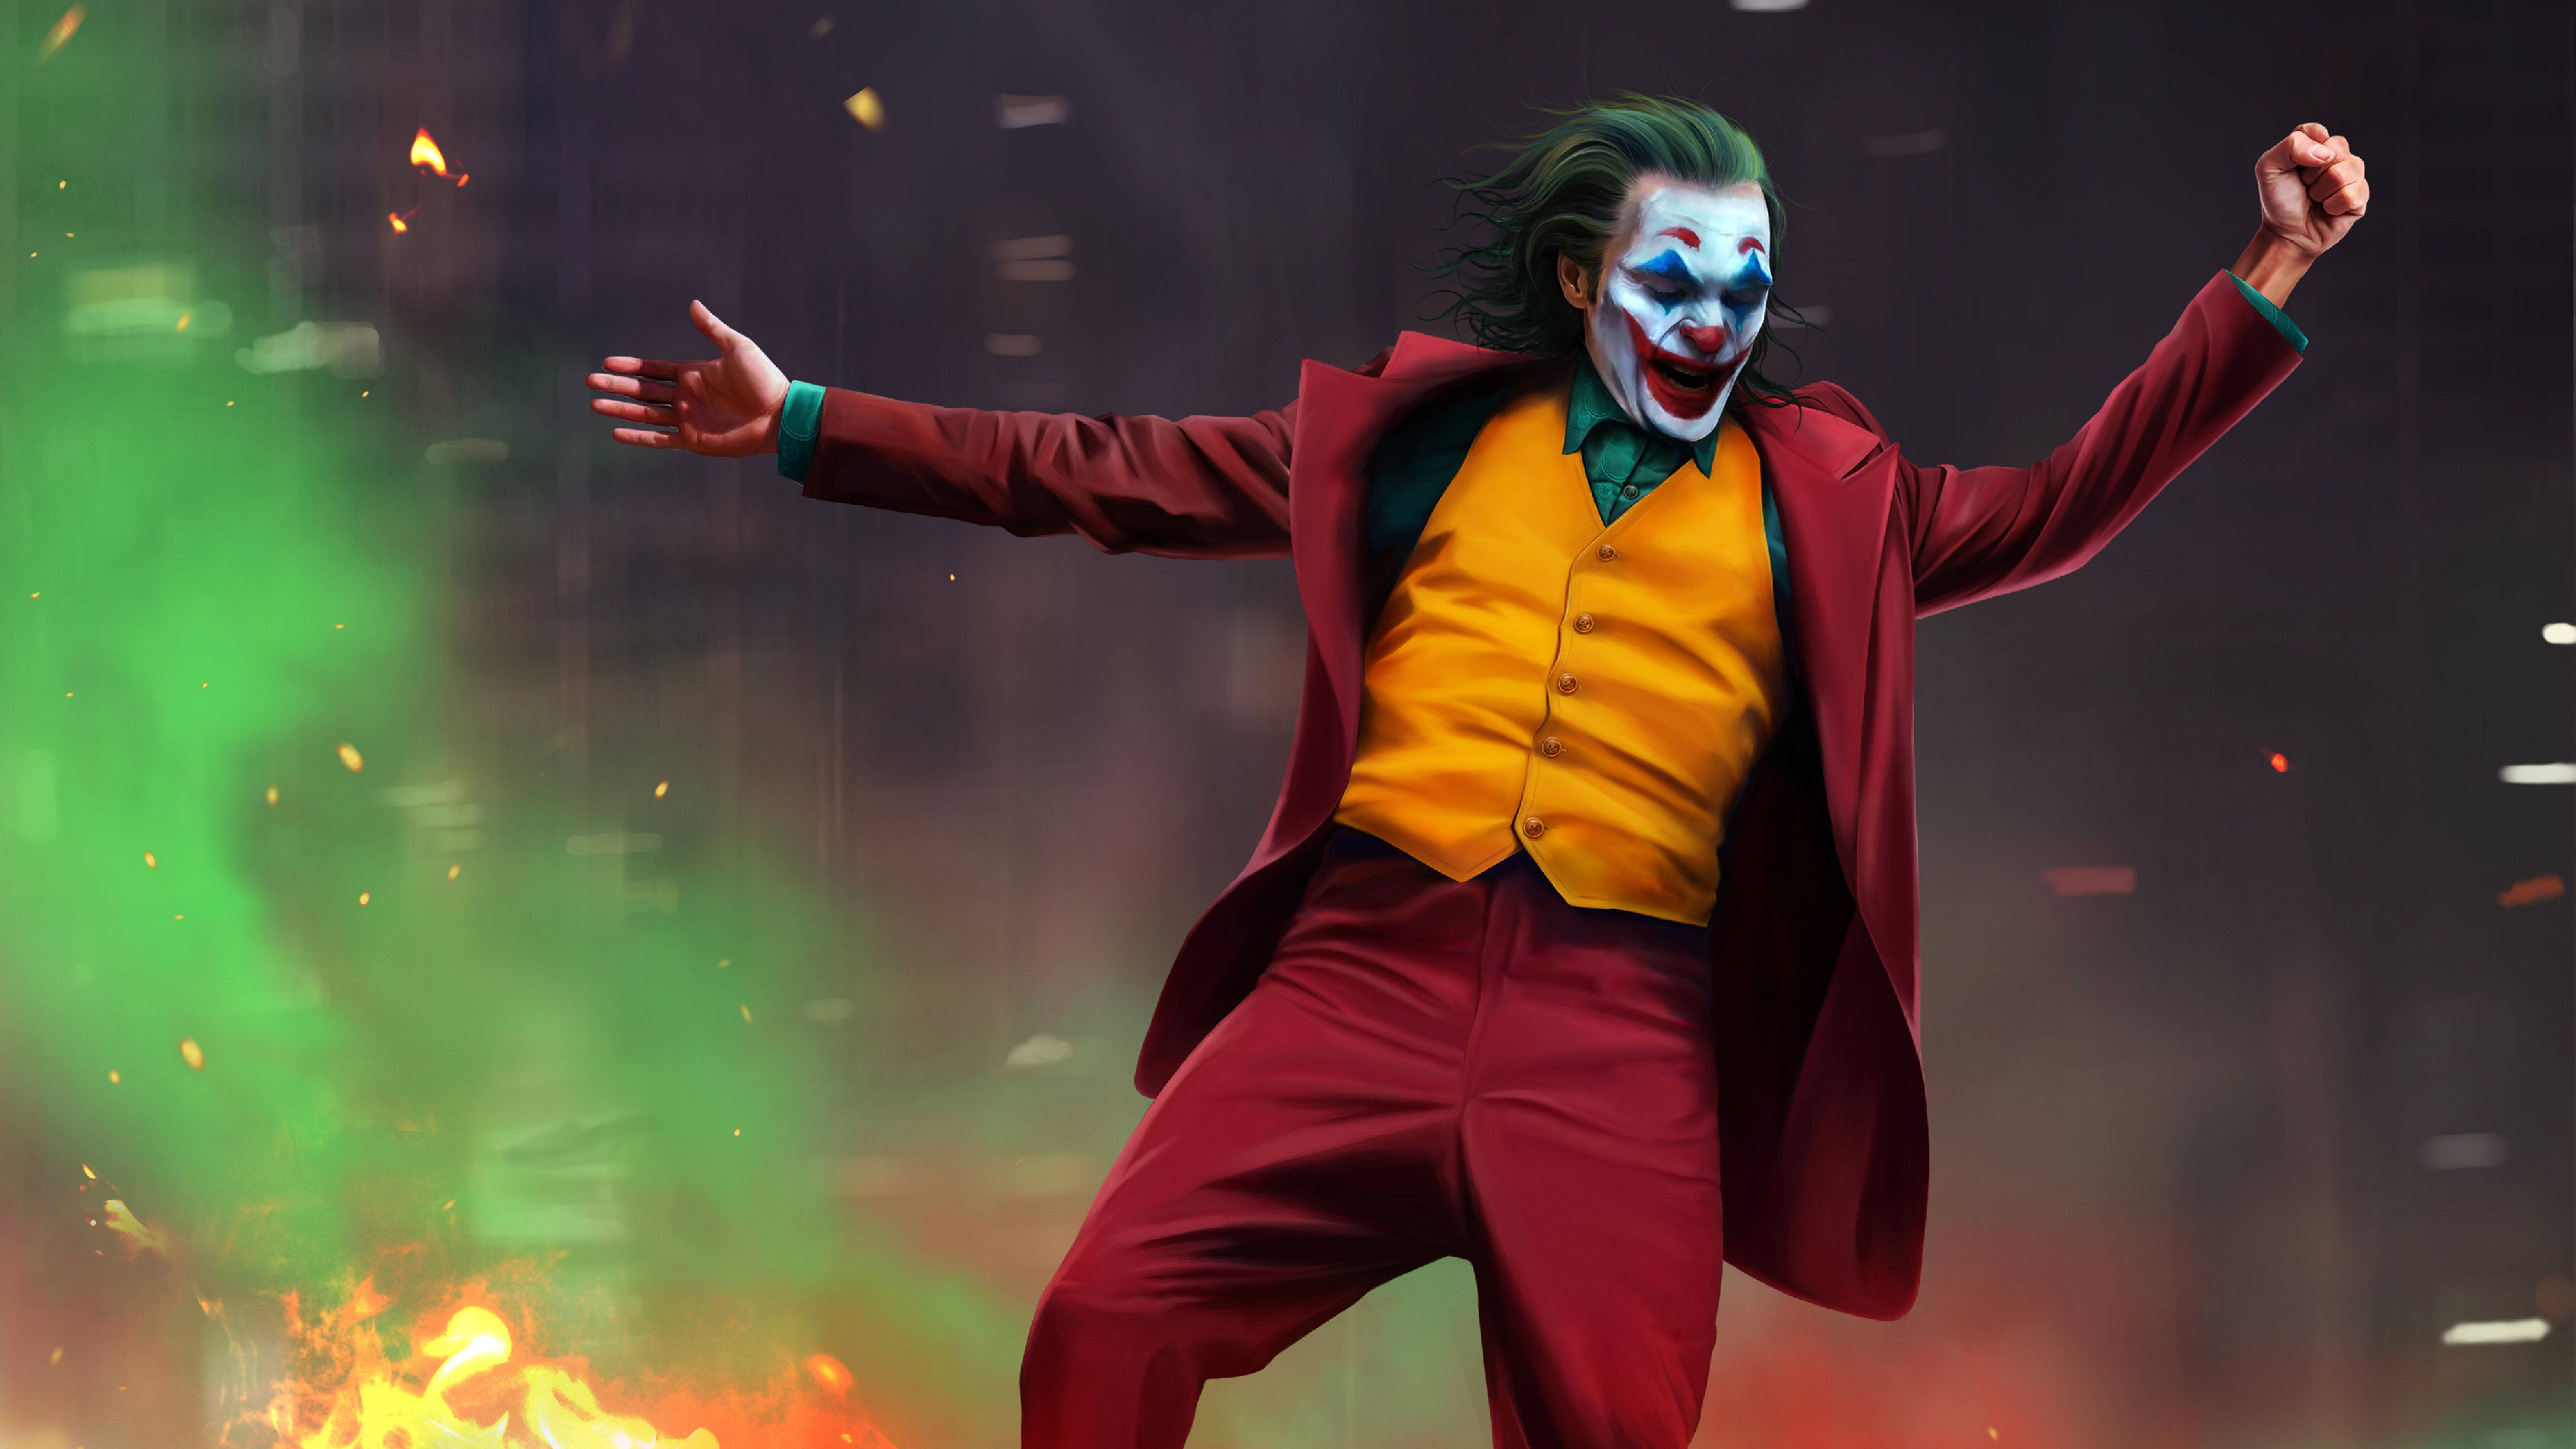 Joker 2019 Dancing Scene Background